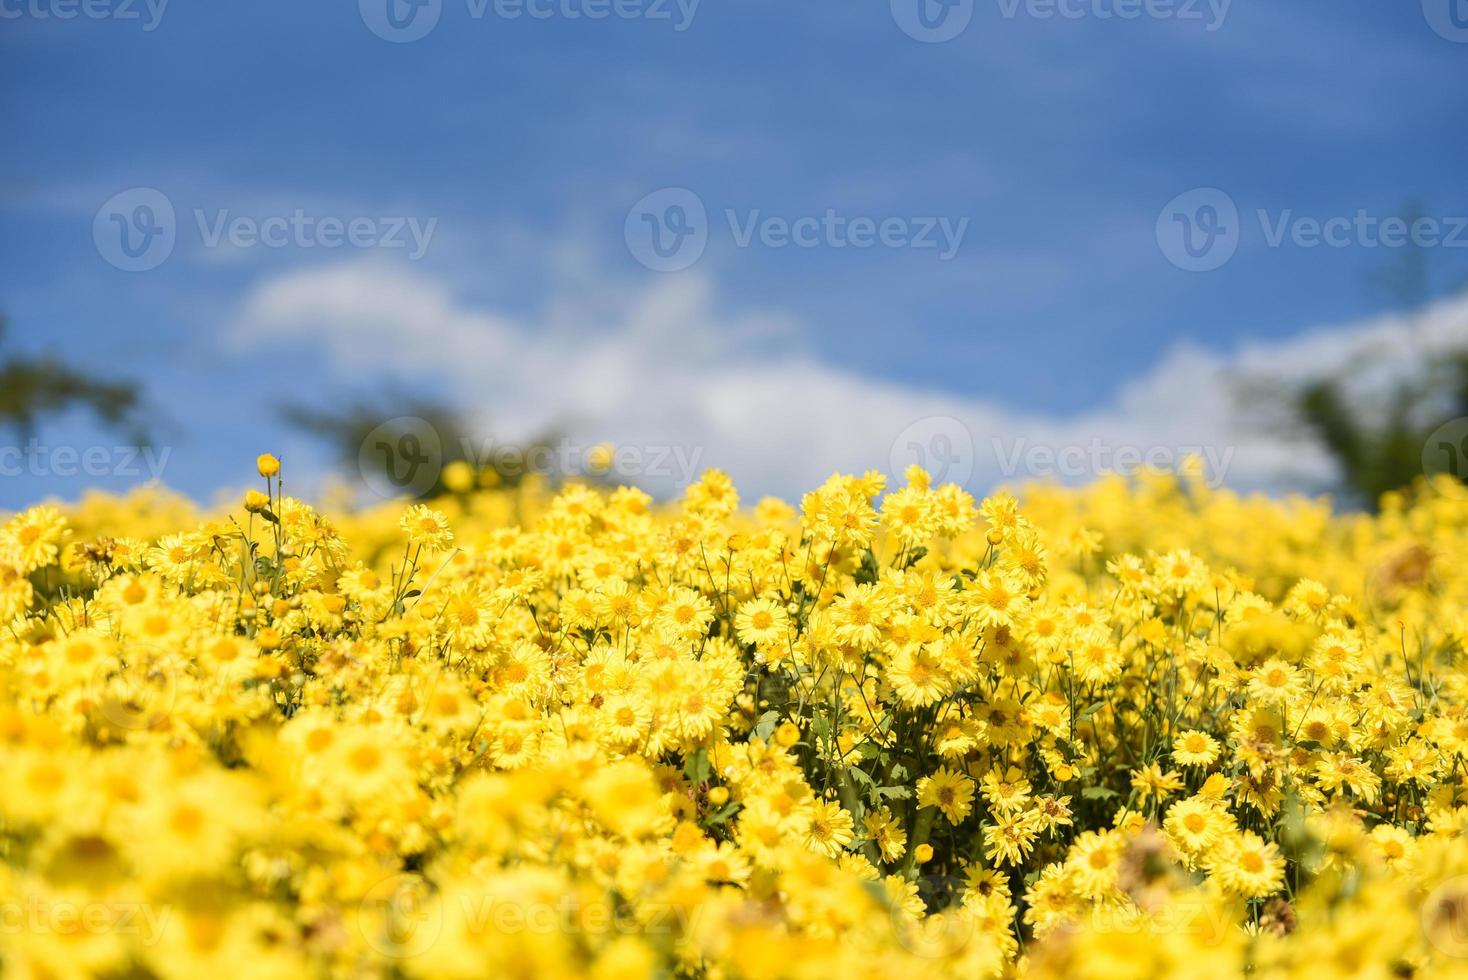 bloemen geel veld met gele chrysanthemum in de tuin en blauwe hemelachtergrond, chrysanthemum morifolium ramat foto